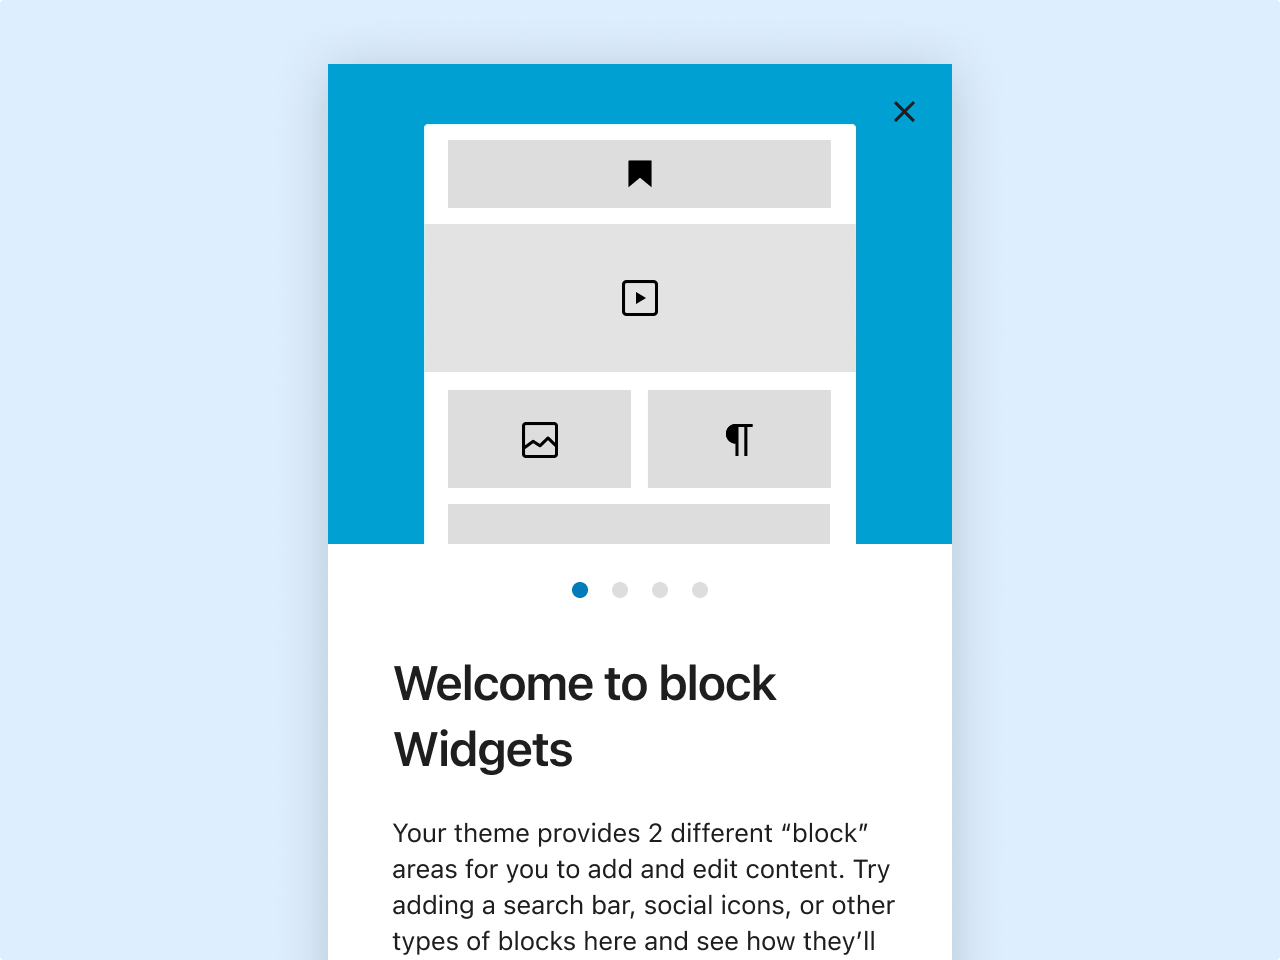 about widgets blocks